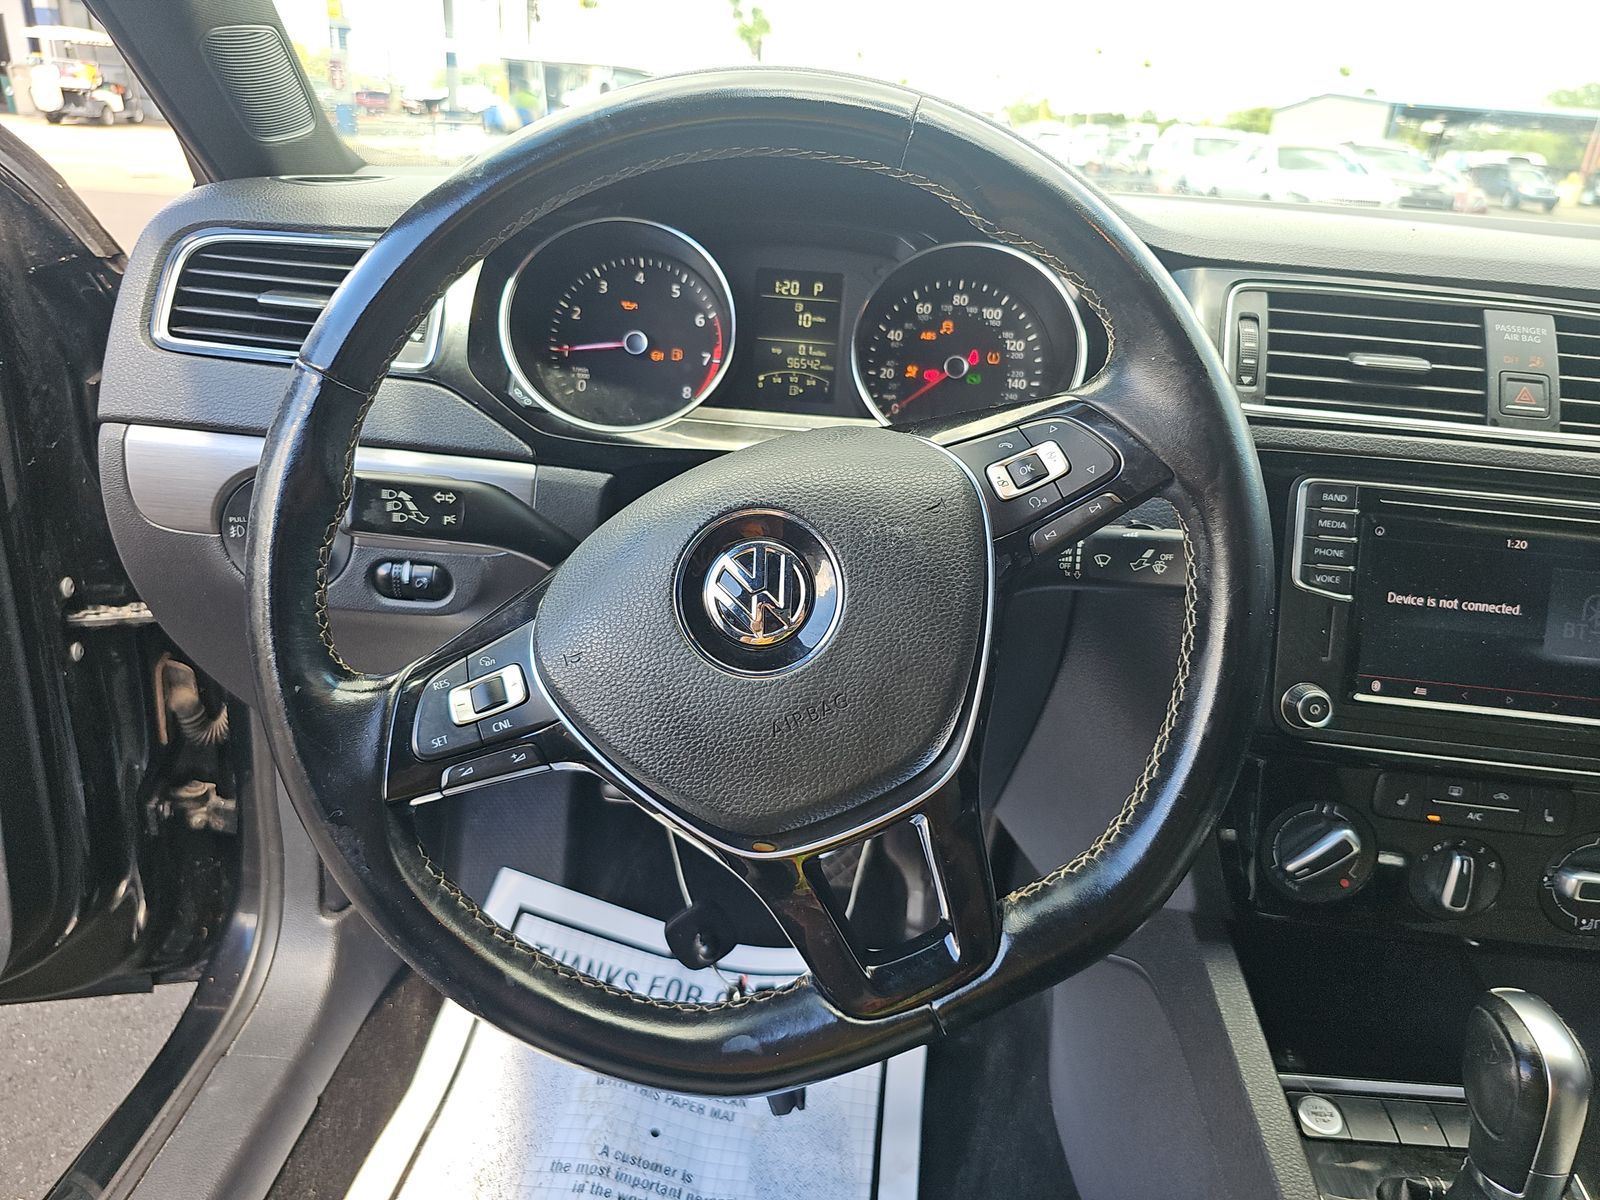 2016 Volkswagen Jetta 1.8T Sport FWD